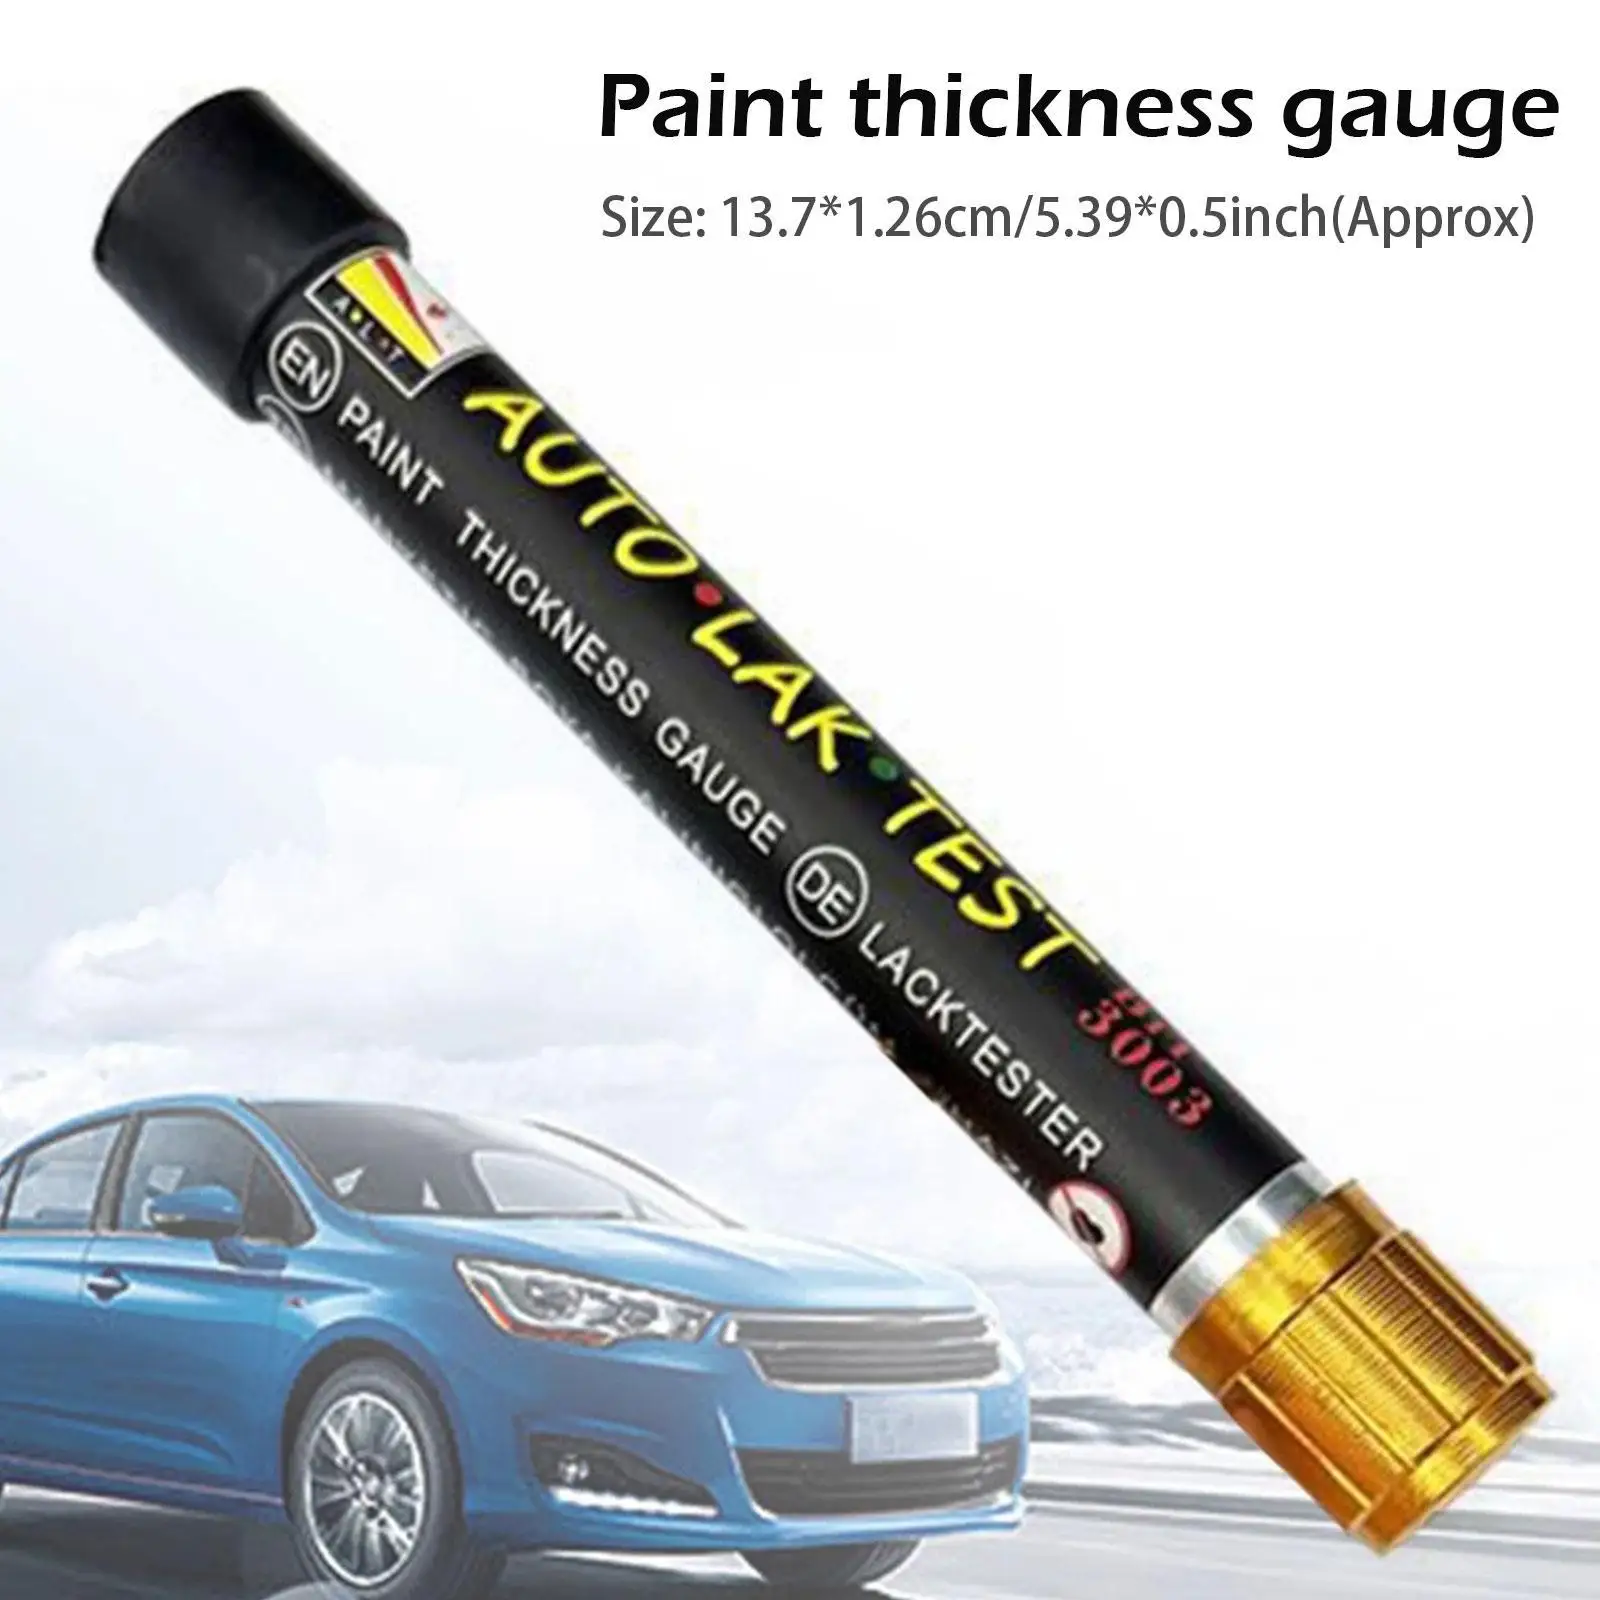 Car Paint Thickness Tester Pen Auto Lak Test Bit Portable Car Paint Coating Tester Meter Thickness Meter Gauge Crash For Car